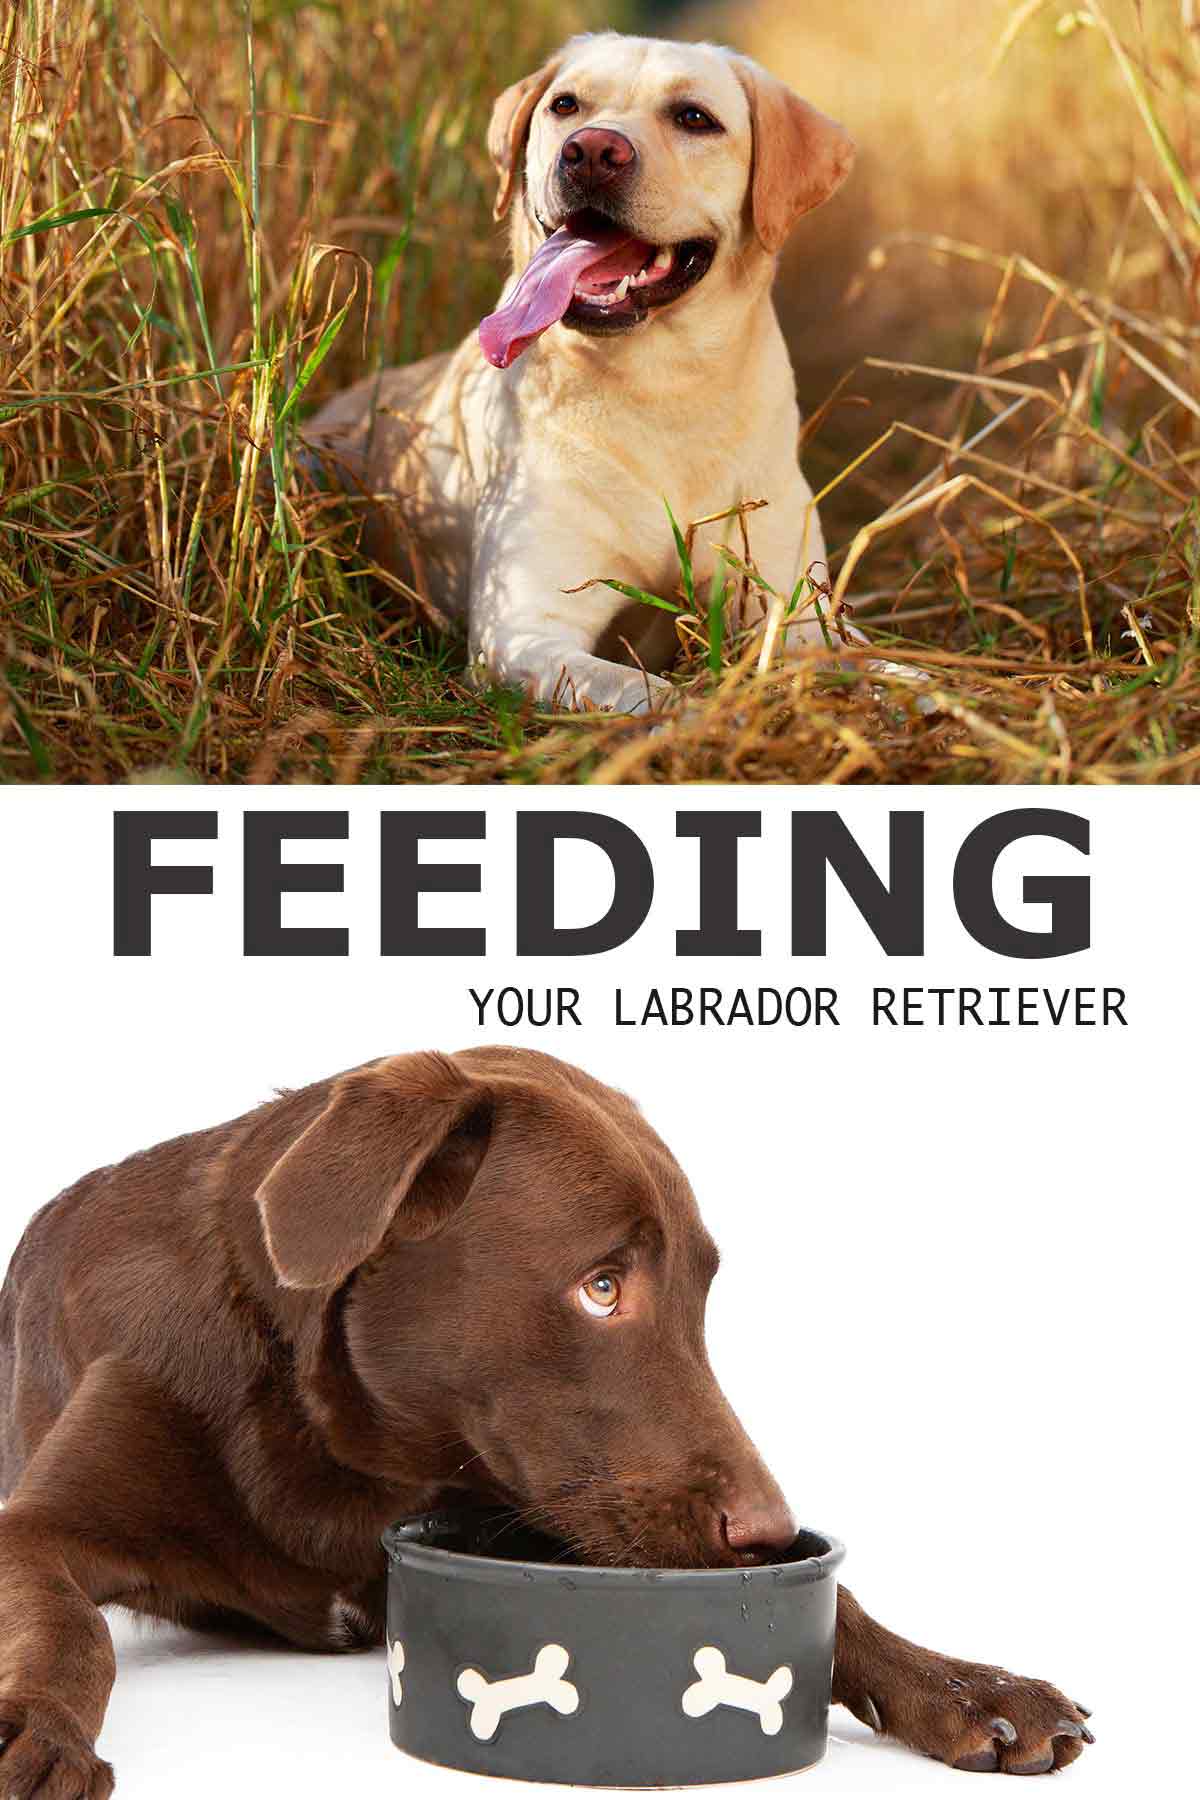 Labrador Food And How To Feed a Labrador